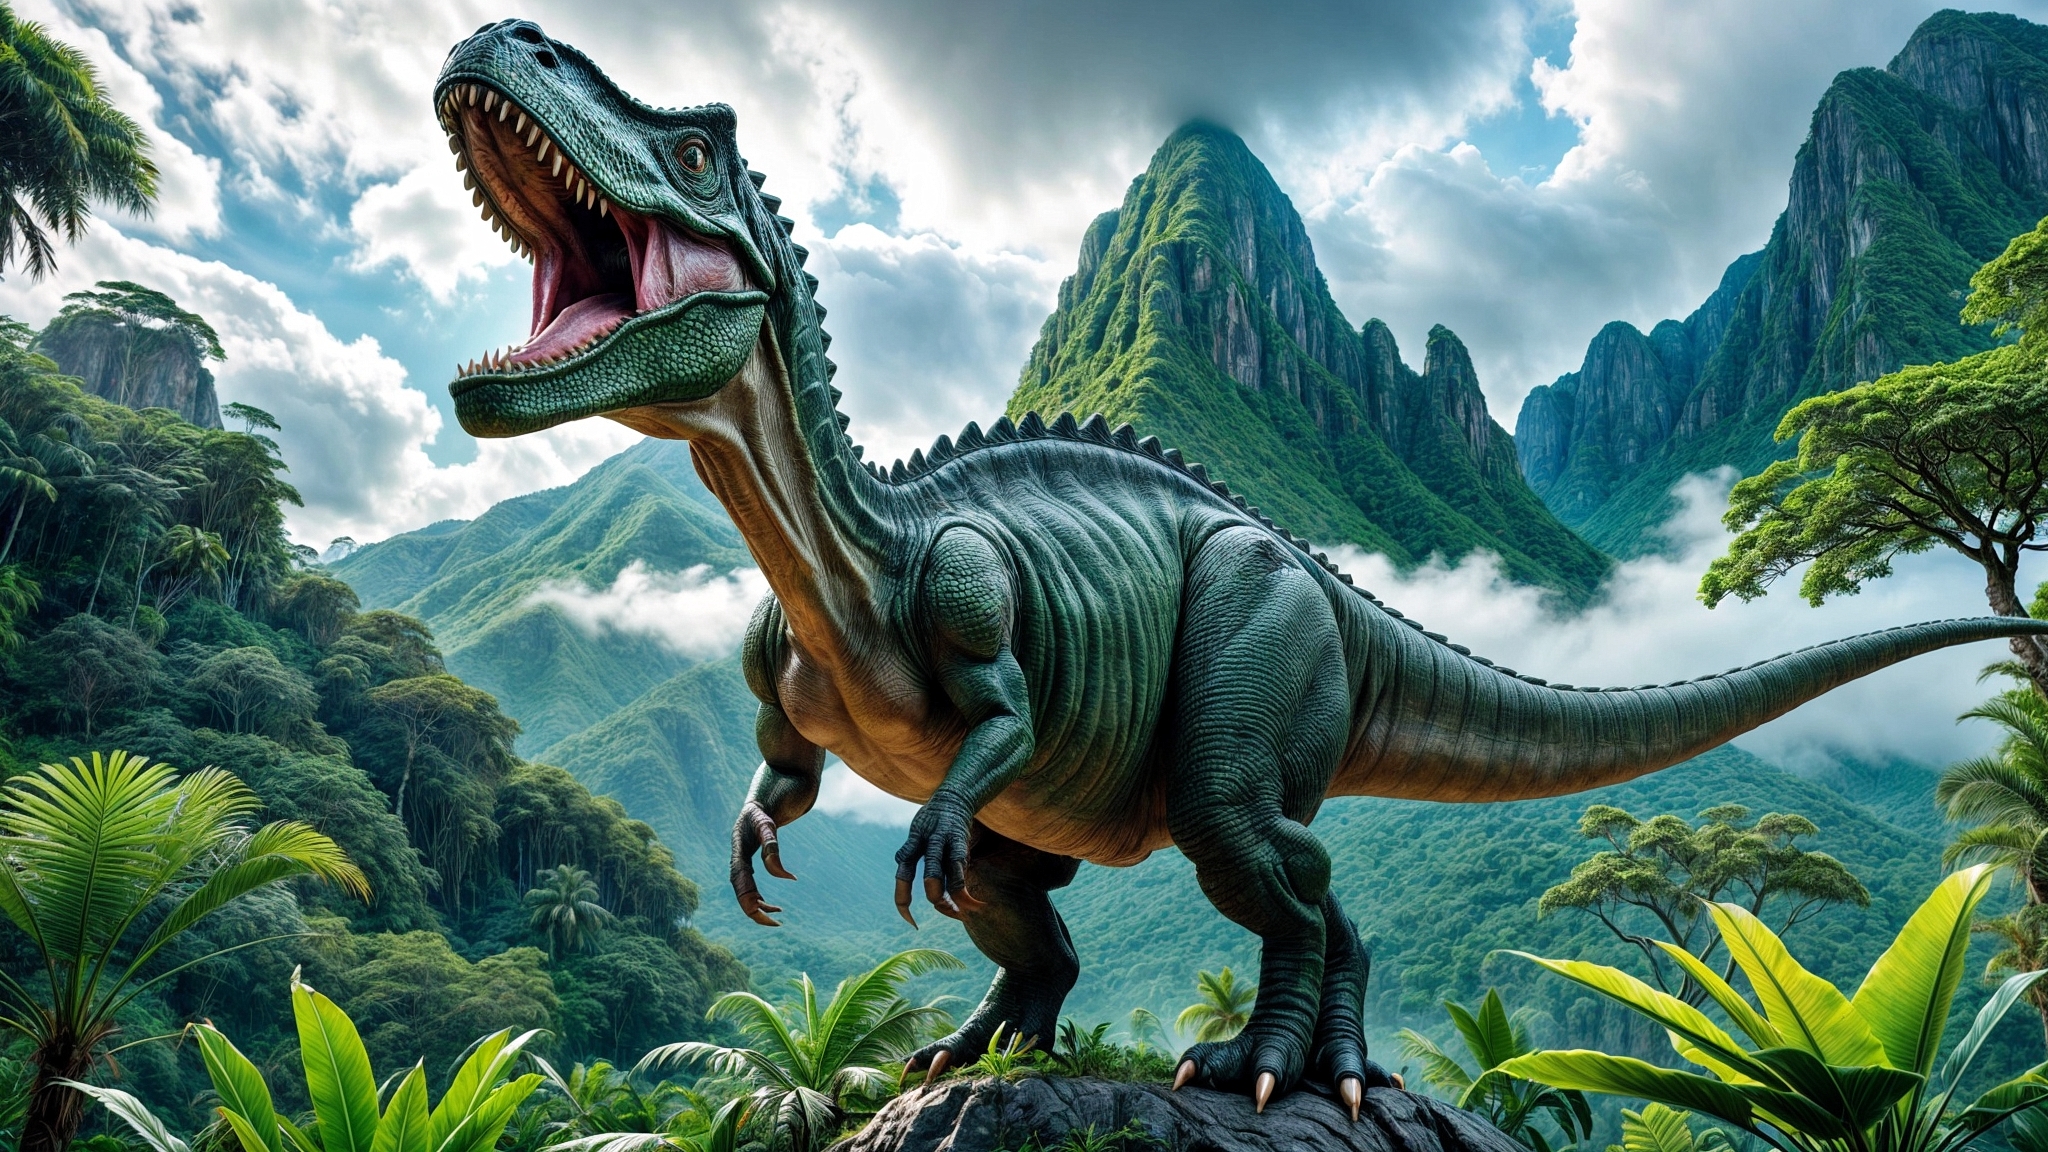 A predatory dinosaur against a mountain backdrop.